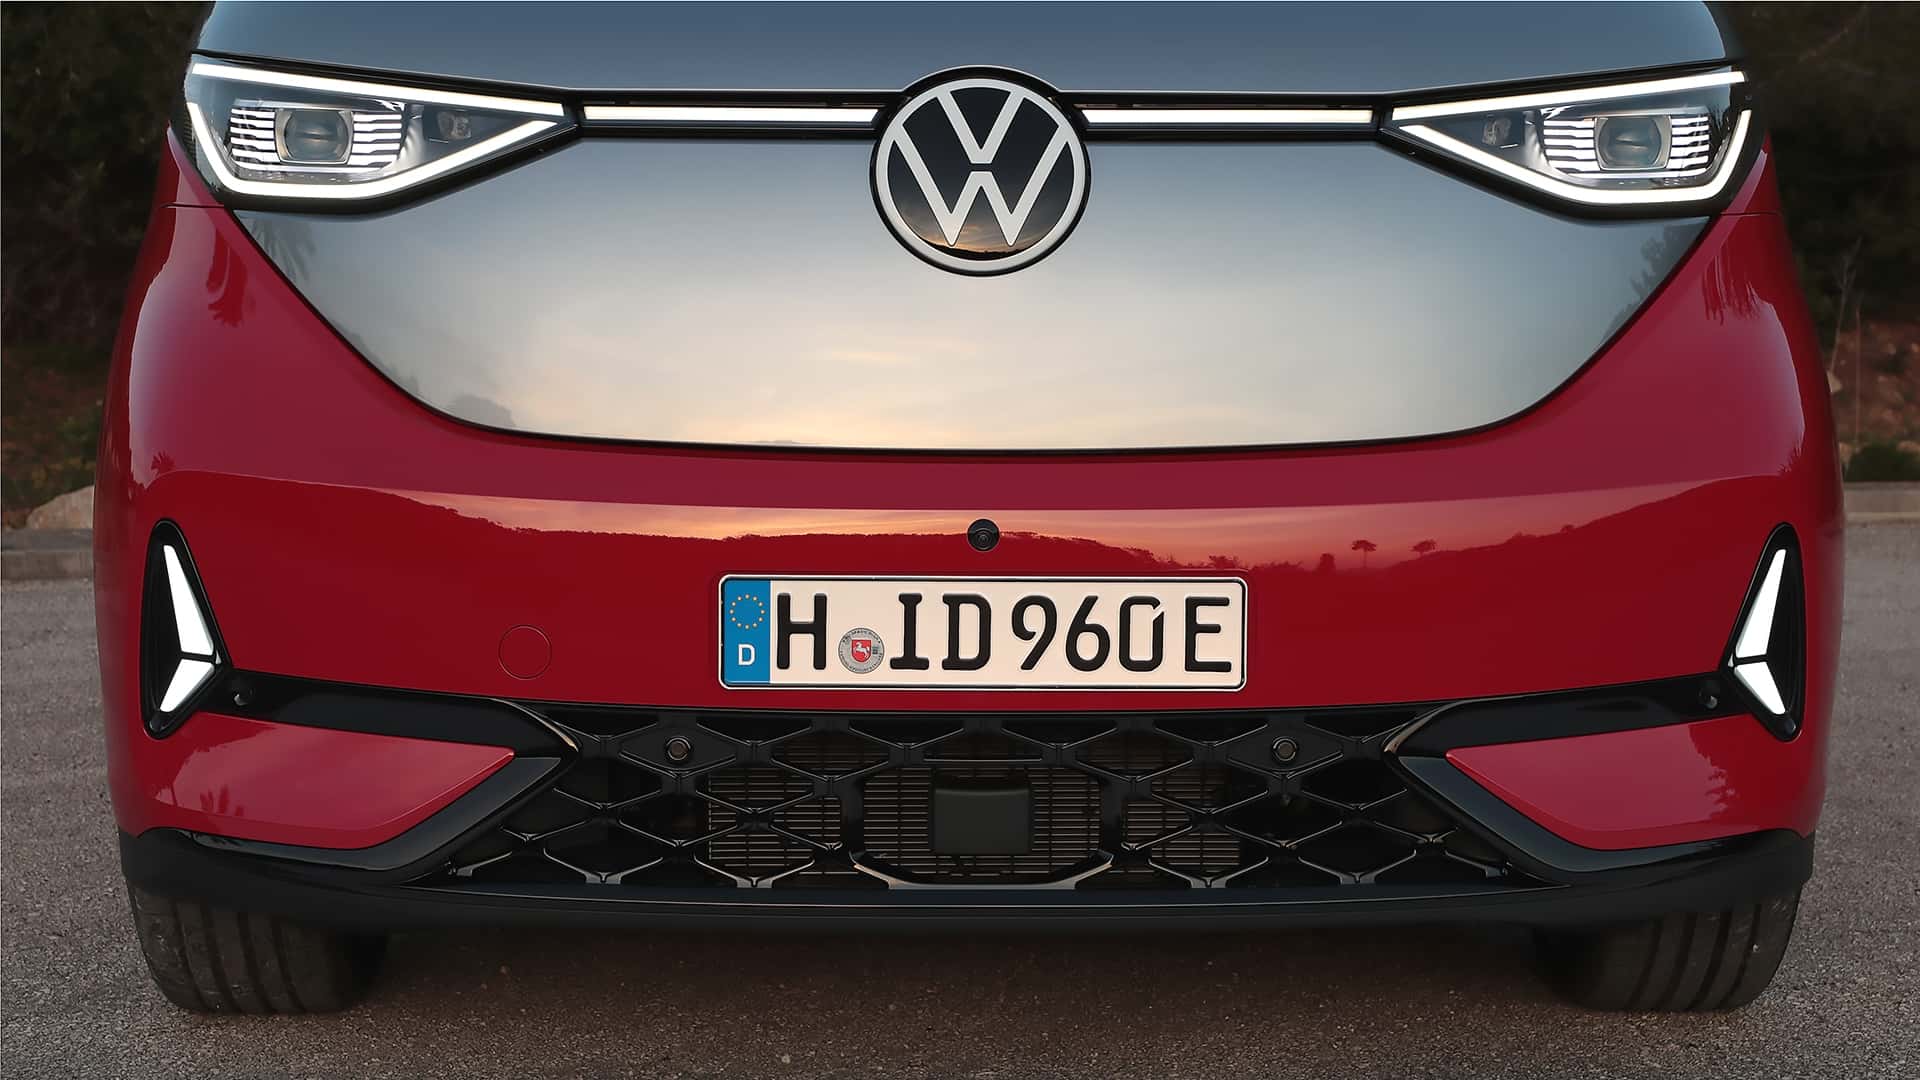 Volkswagen ID. Buzz GTX